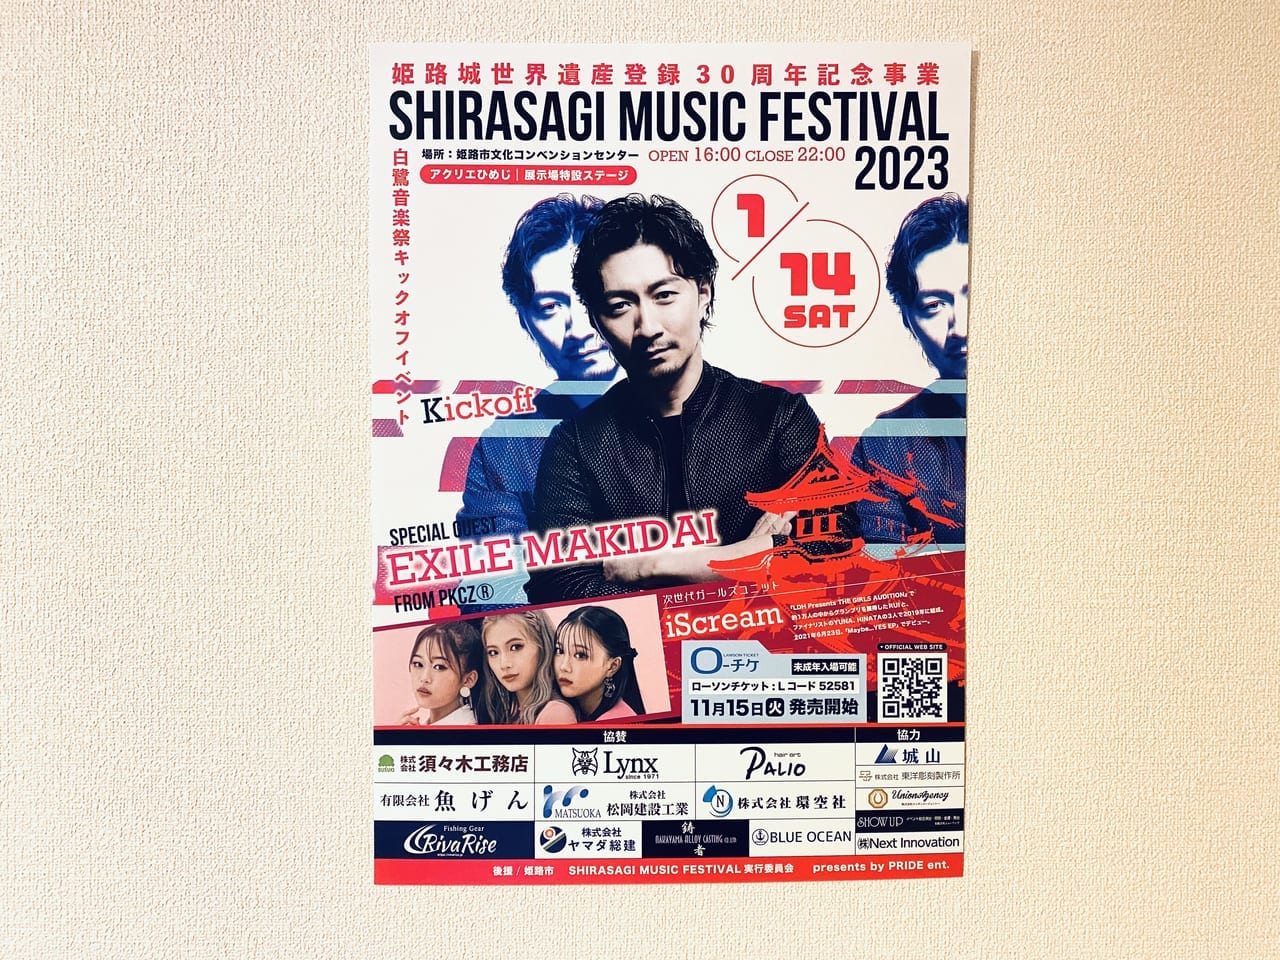 SHIRASAGI MUSIC FESTIVAL 2023